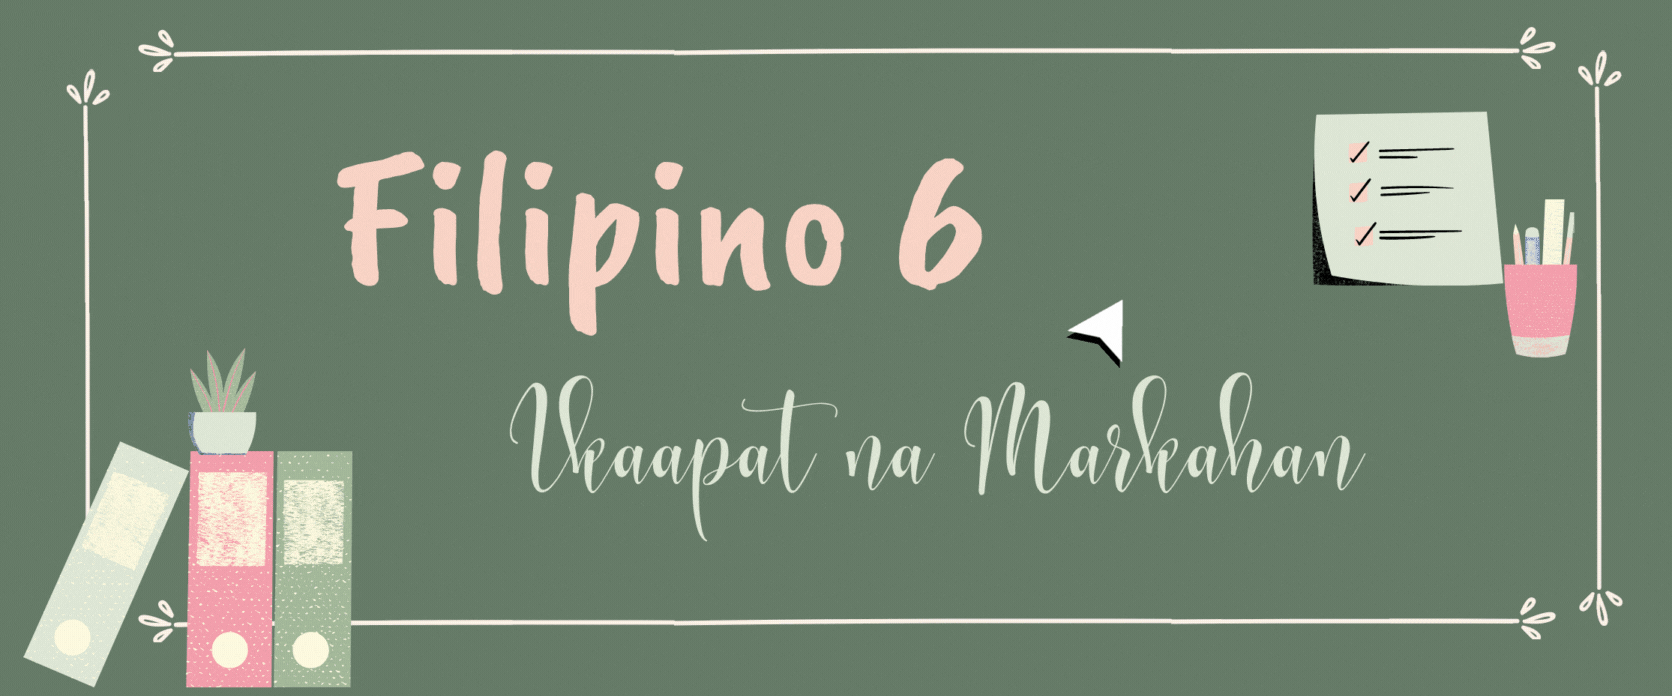 G6 - Filipino Quarter 4 - Pantig